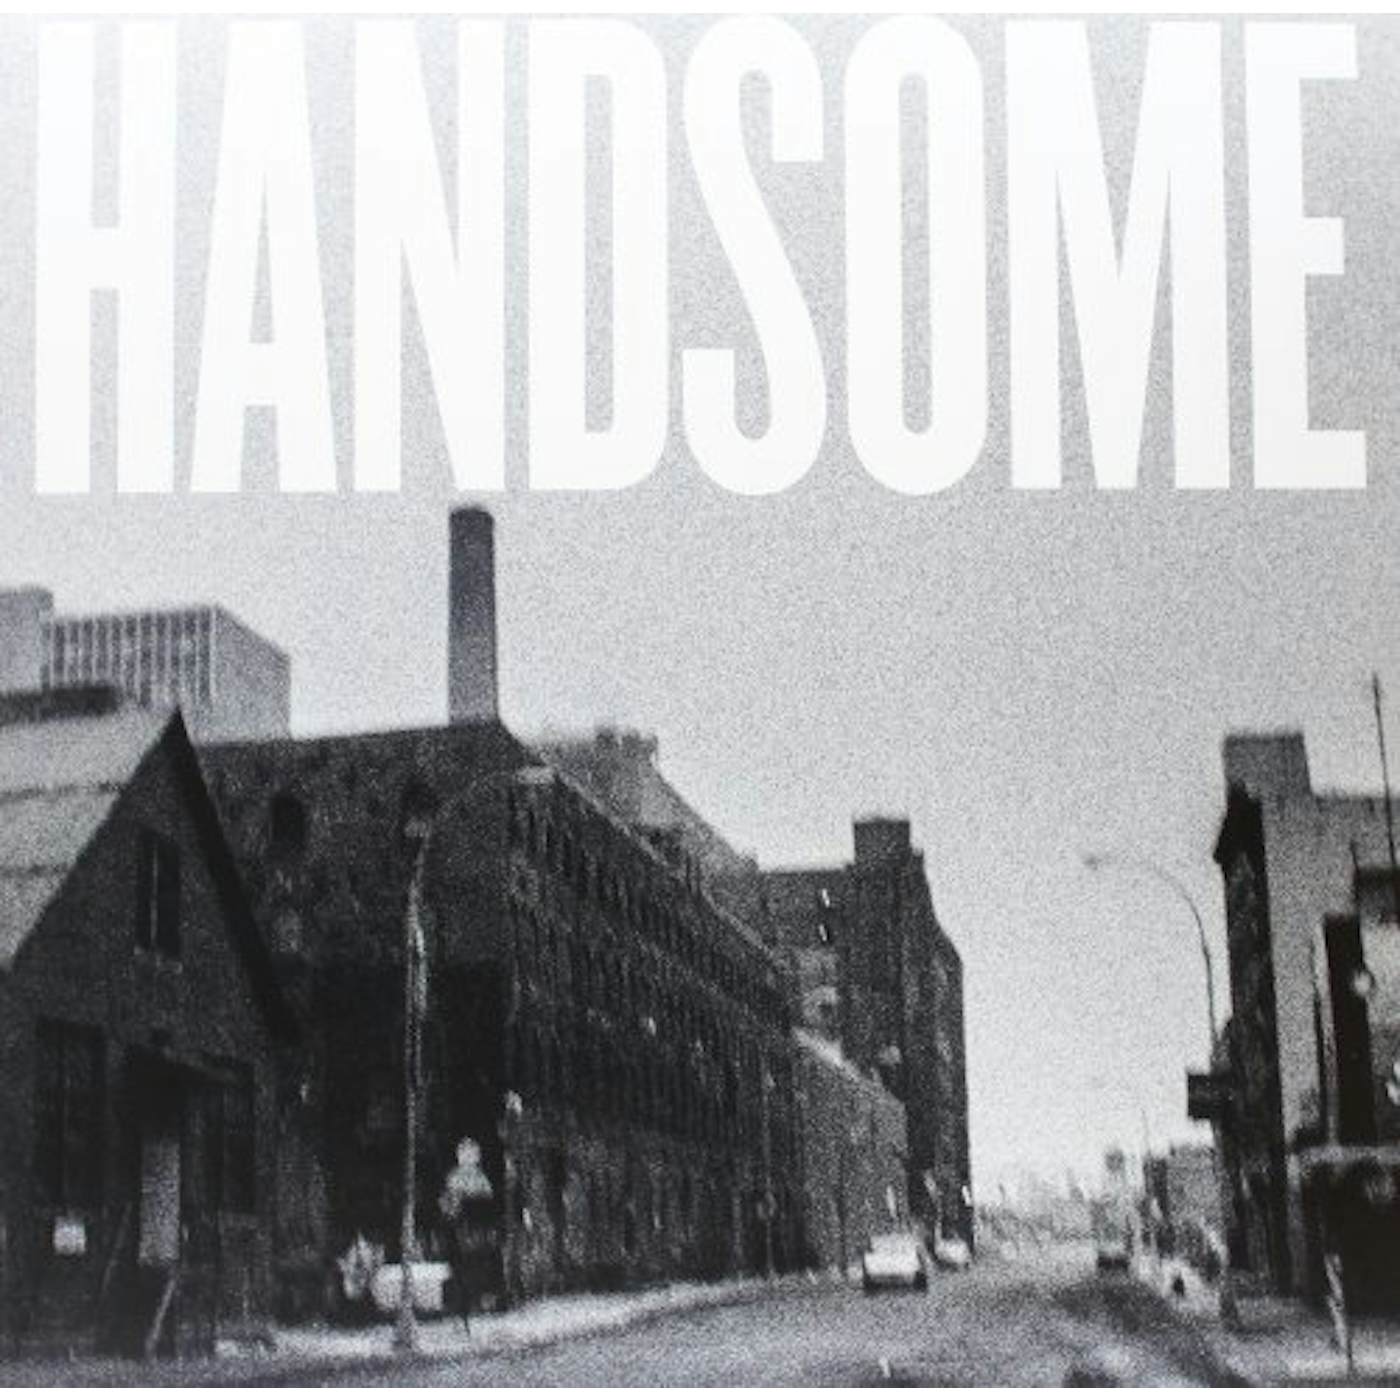 HANDSOME   (WSV) Vinyl Record - Limited Edition, 180 Gram Pressing